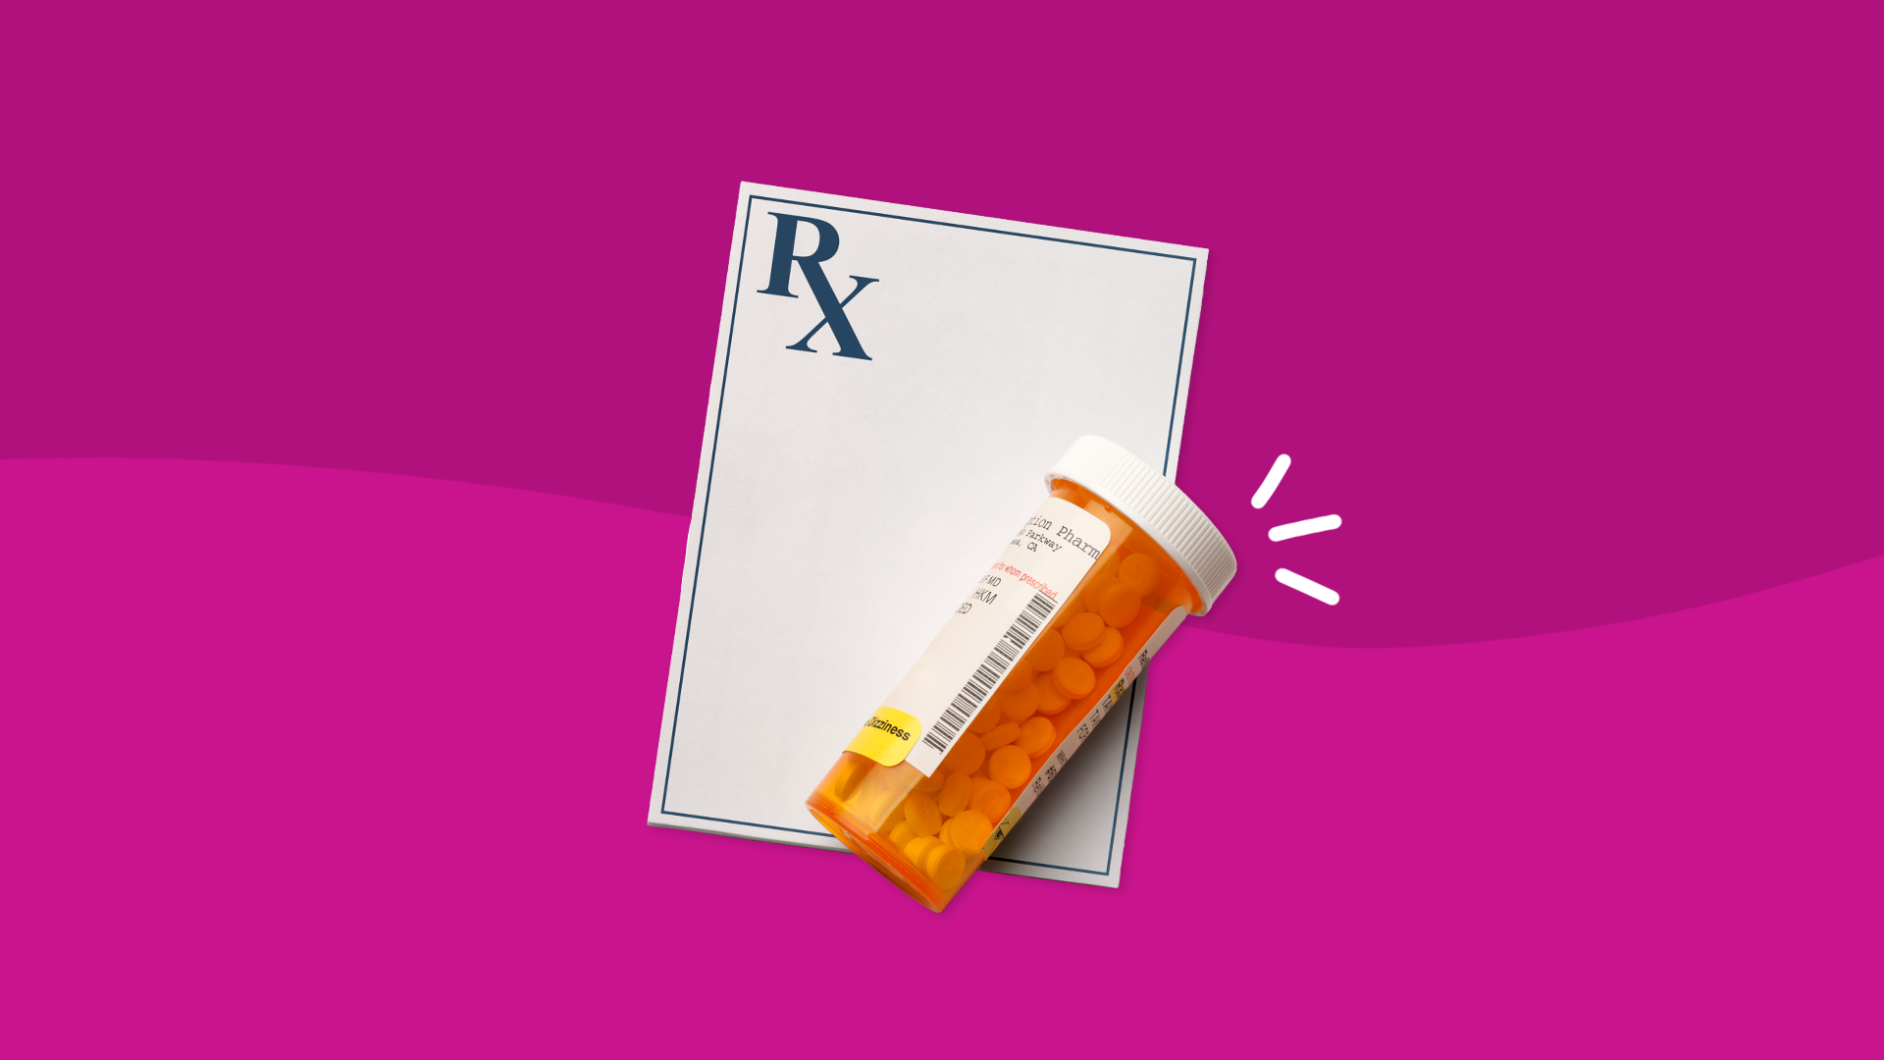 Prescription pad with pill bottle: Celexa side effects